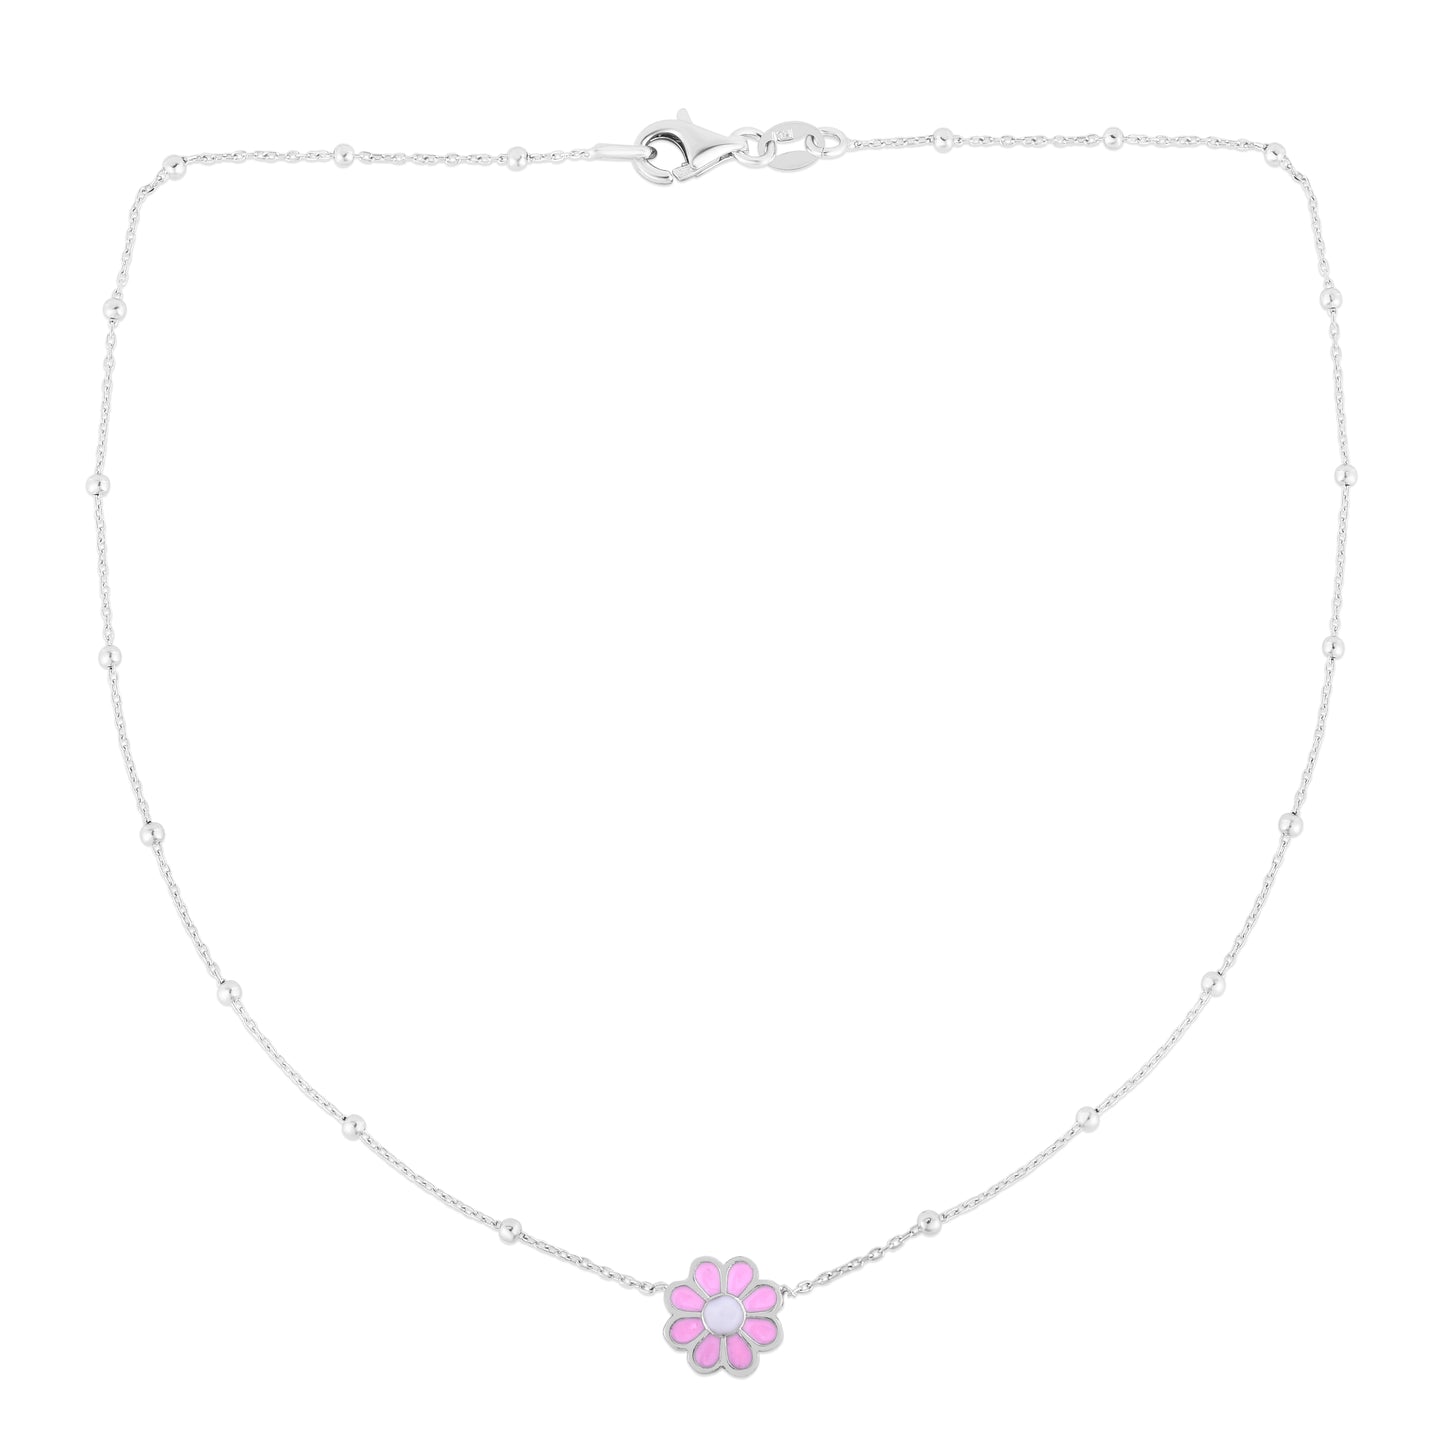 Silver Enamel Pink Flower Necklace